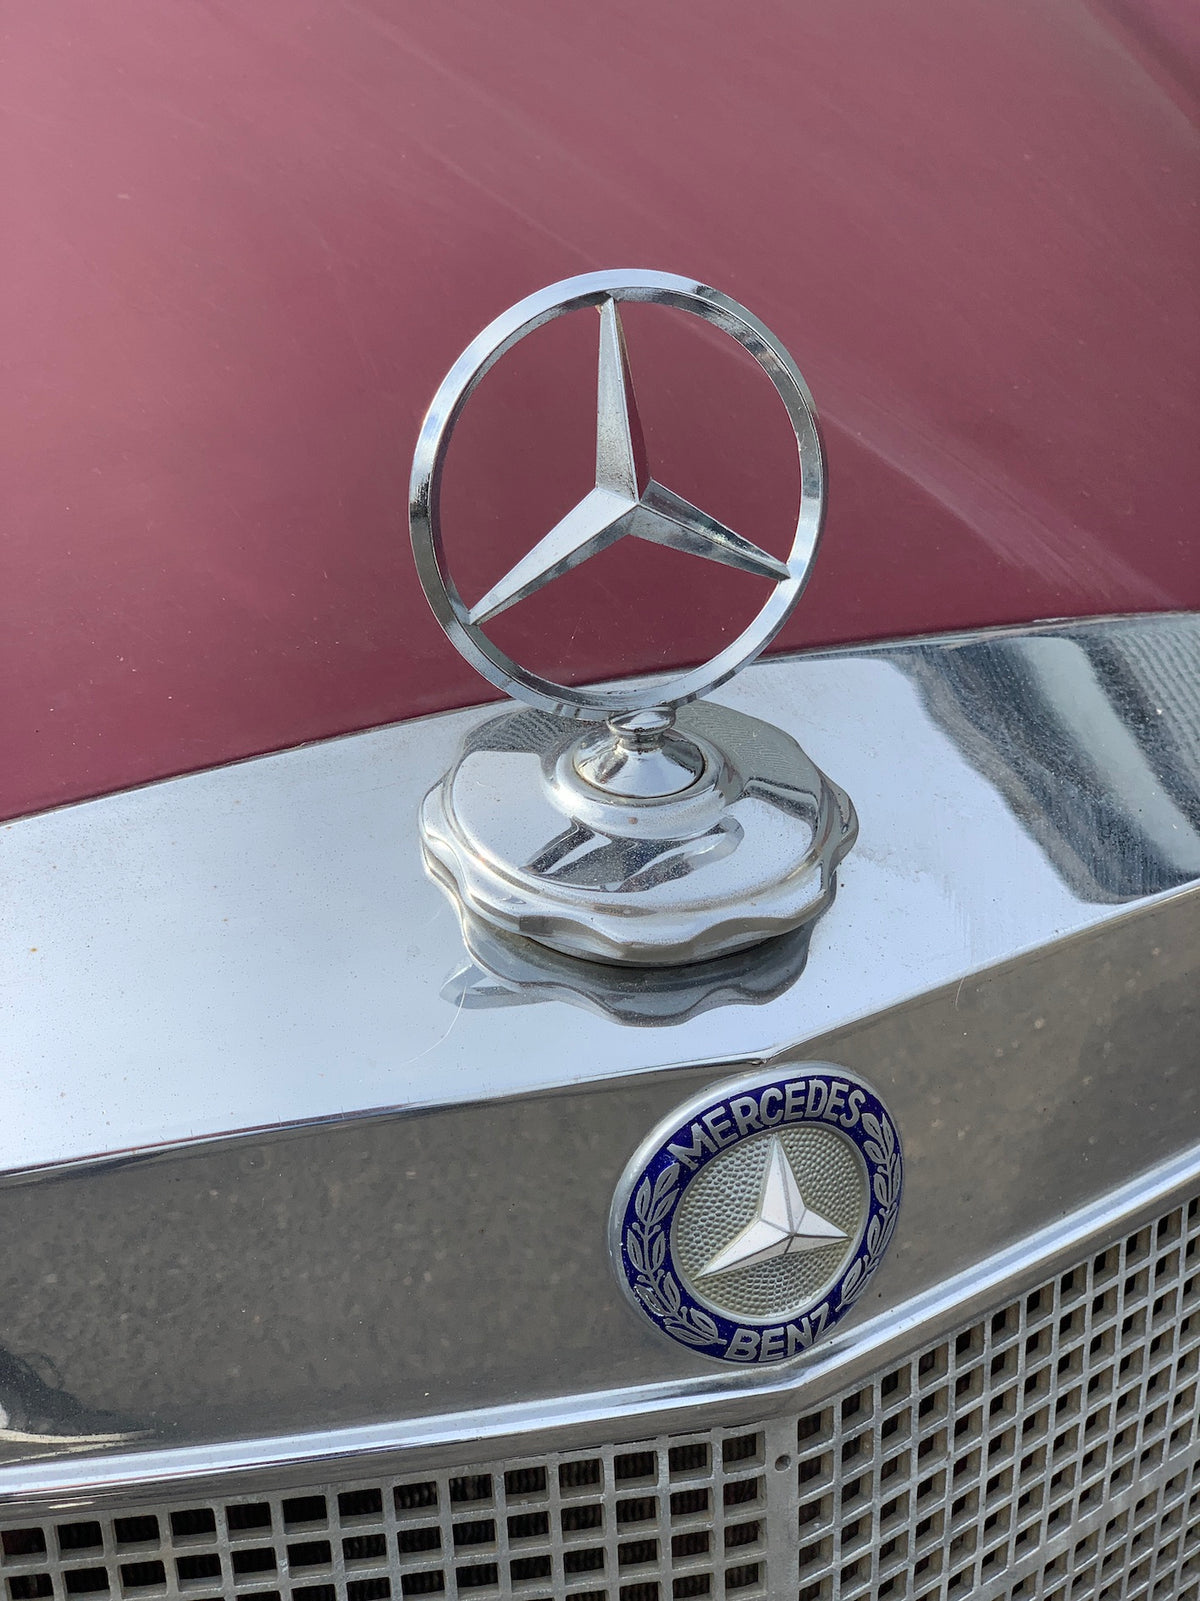 1967 Mercedes 250 S (W108)